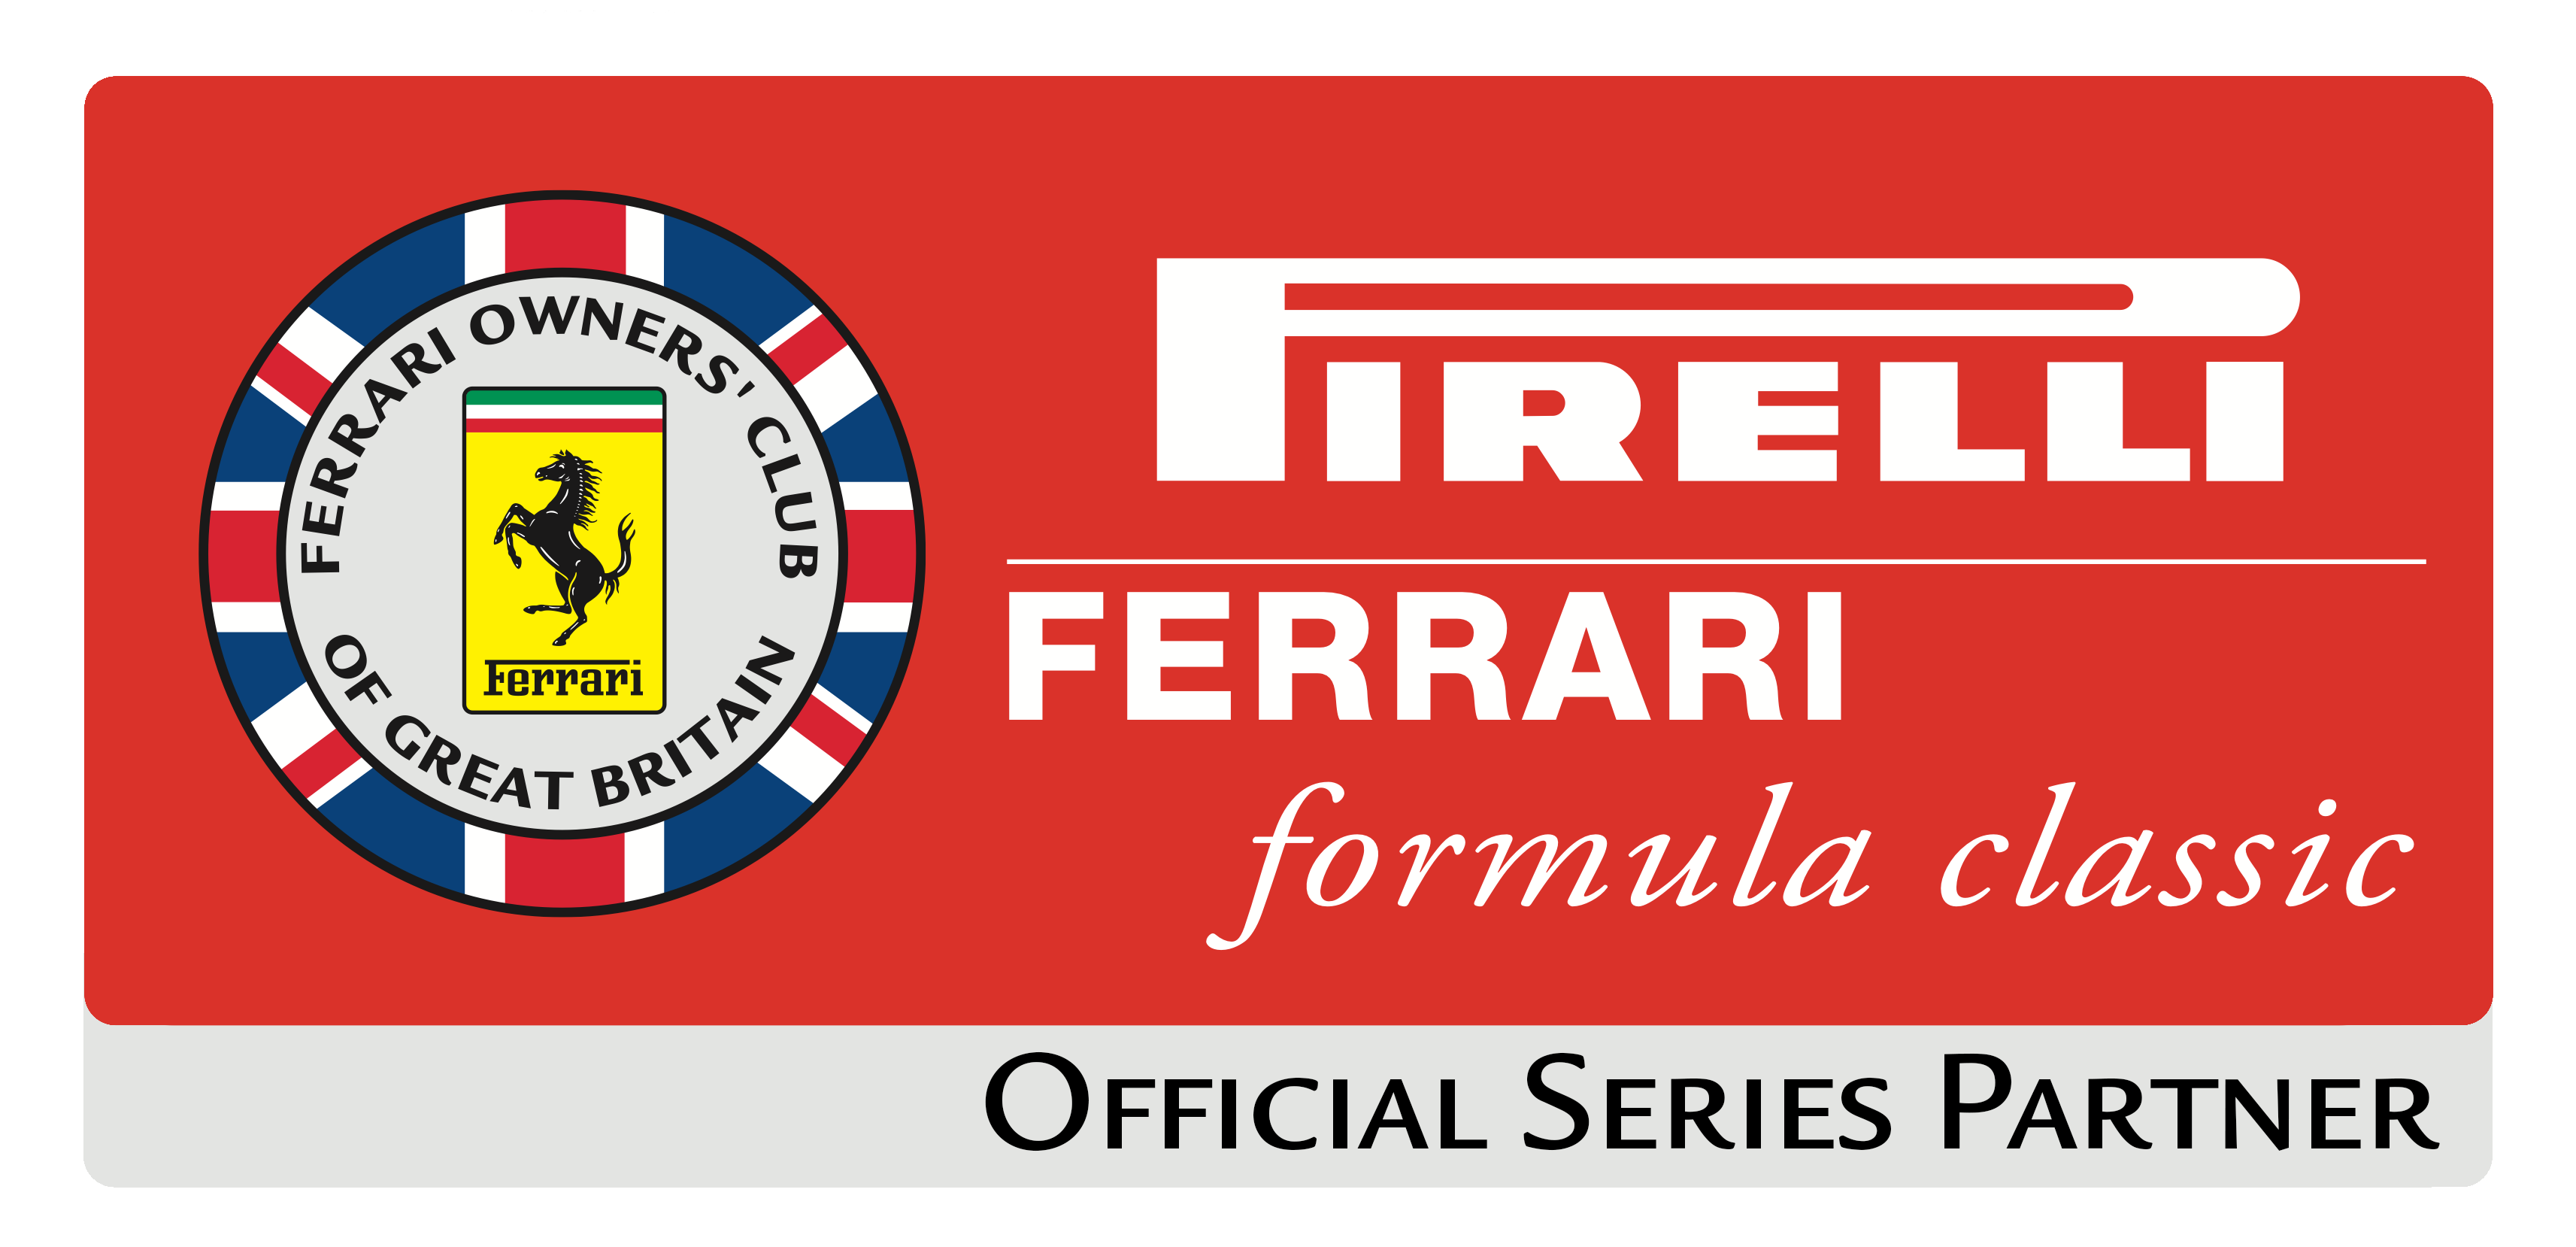 Pirelli Ferrari Formula Classic